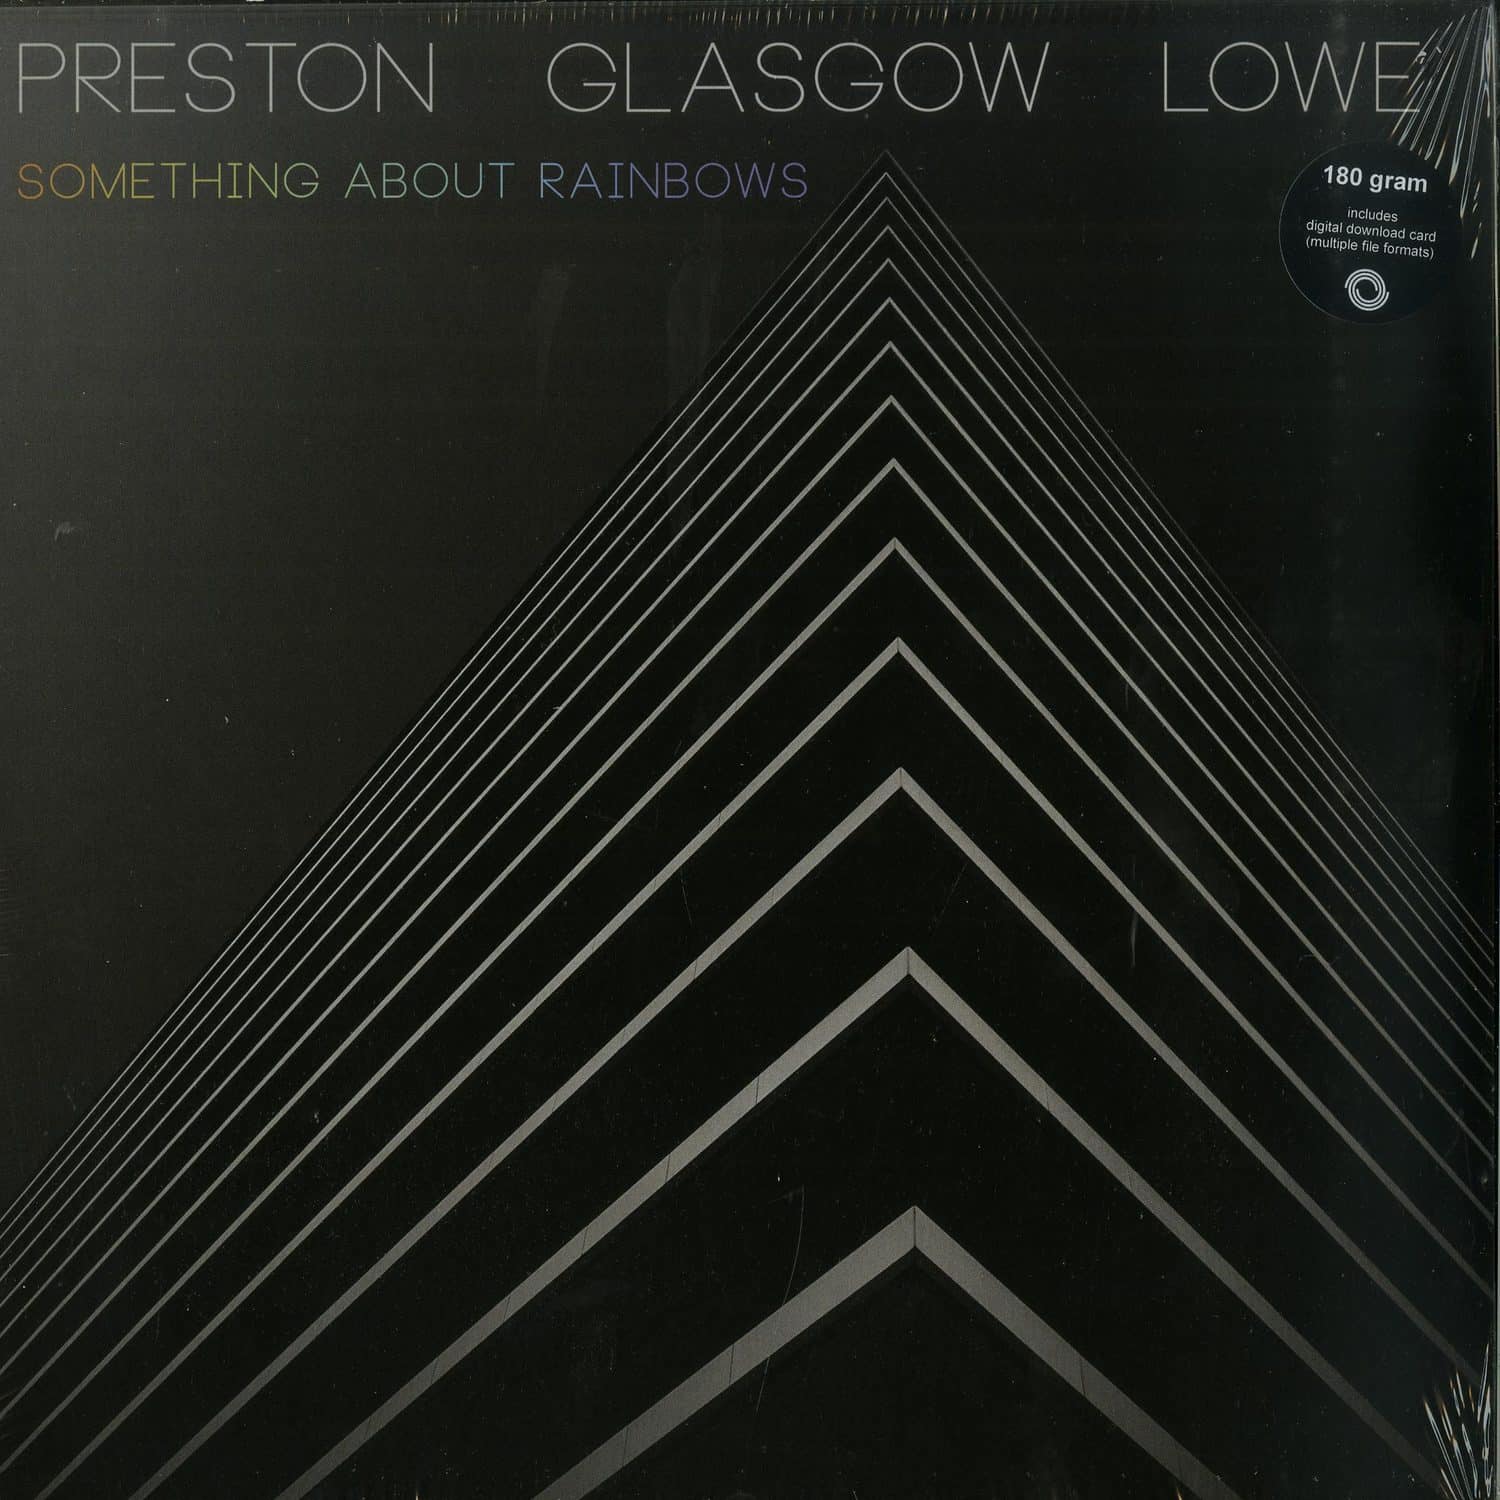 Preston Glasgow Lowe - SOMETHING ABOUT RAINBOWS 